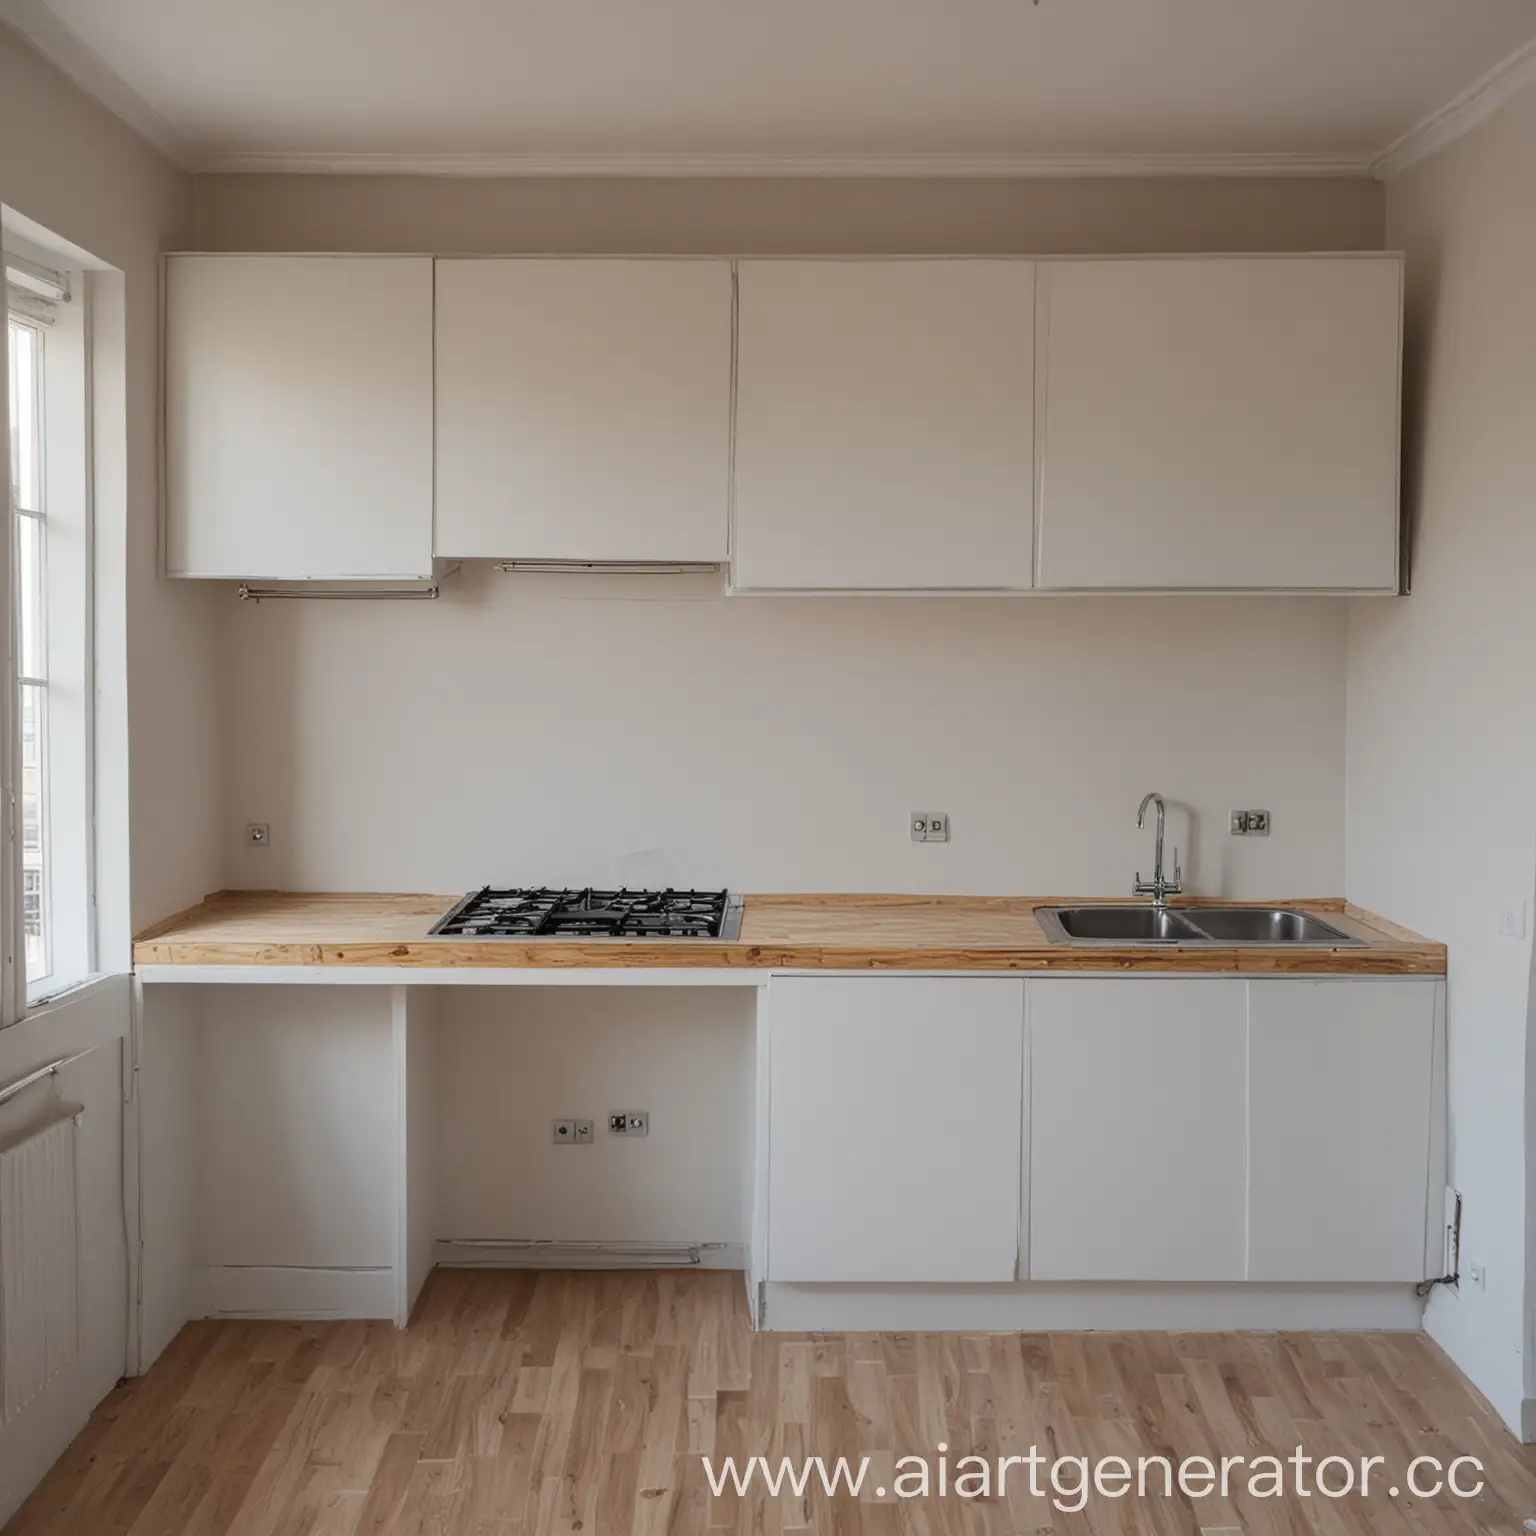 Apartment-Kitchen-Renovation-Completion